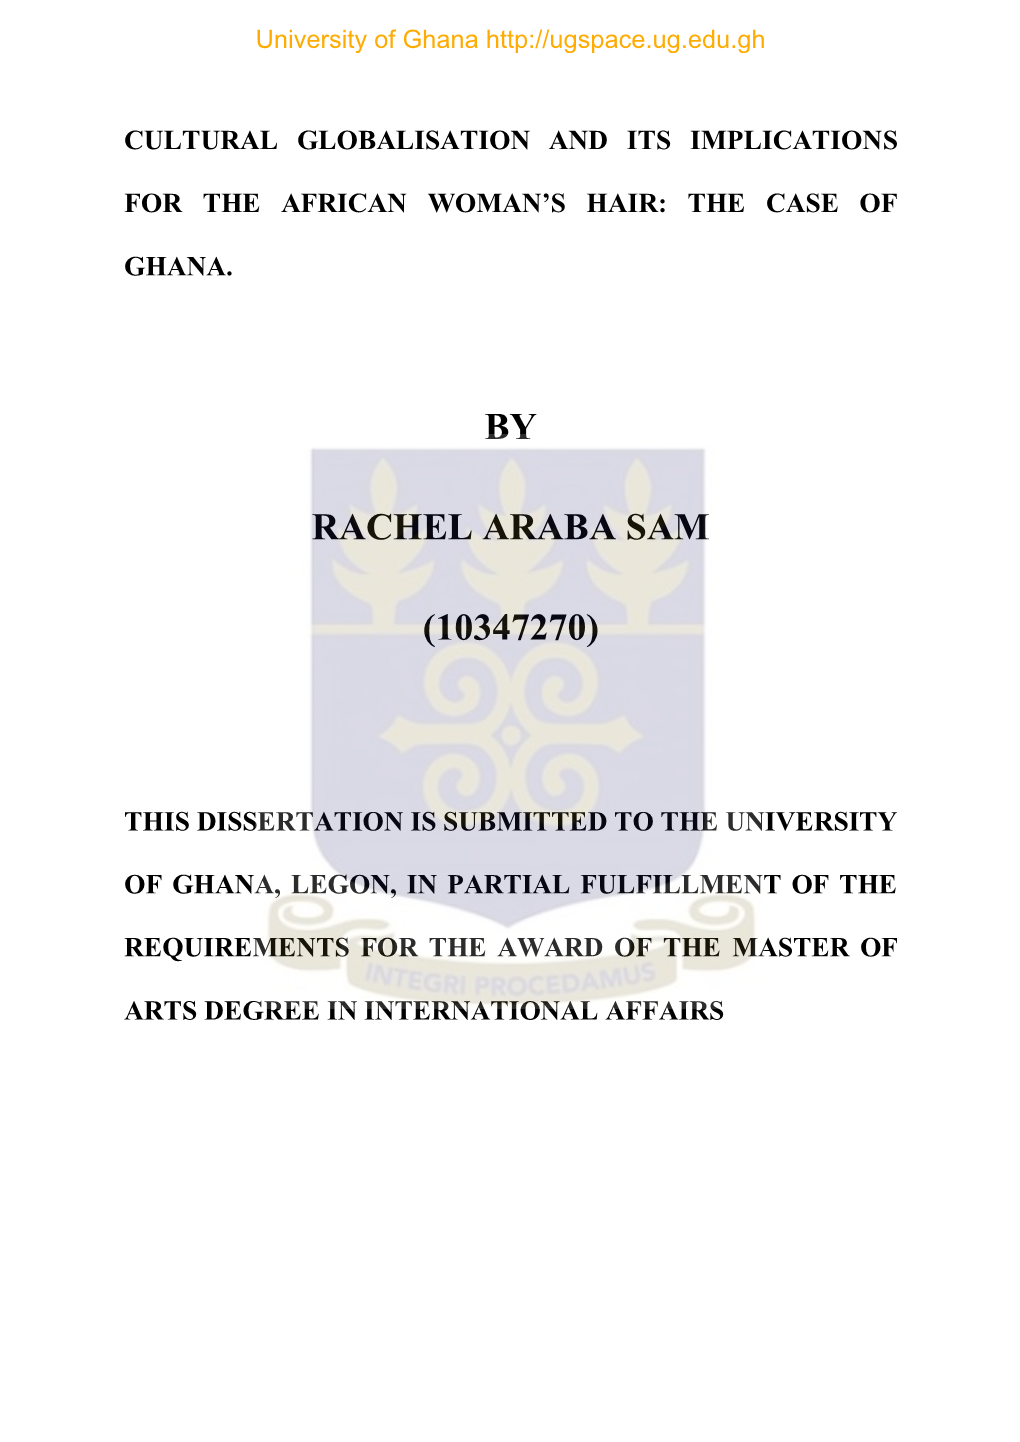 The Case of Ghana. by Rachel Araba Sam (10347270)